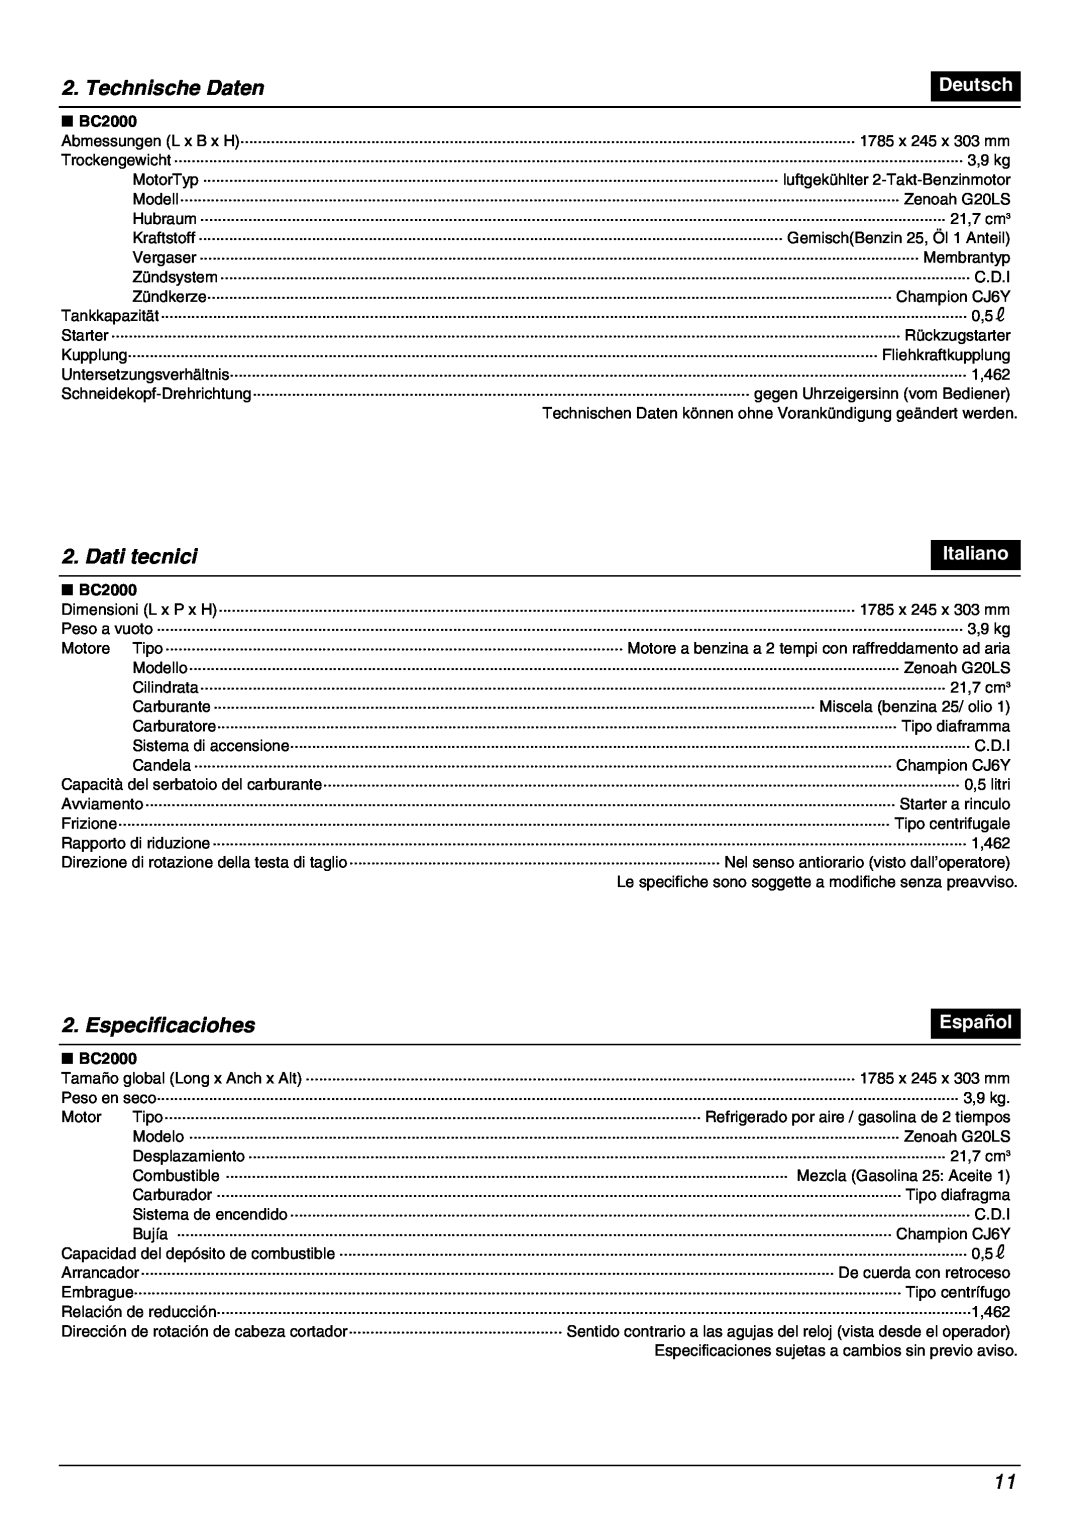 Zenoah BC2000 manual Technische Daten, Dati tecnici, Especificaciohes, Deutsch, Italiano, Español 